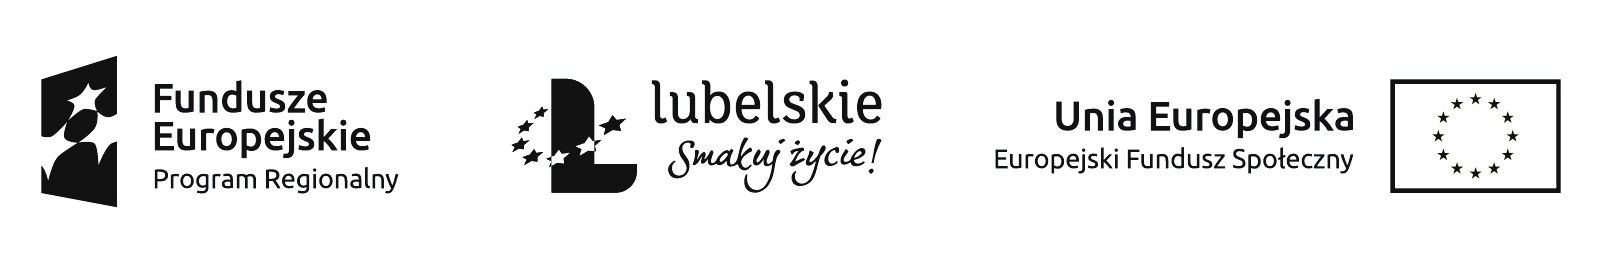 Logo FE UE Lubelskie